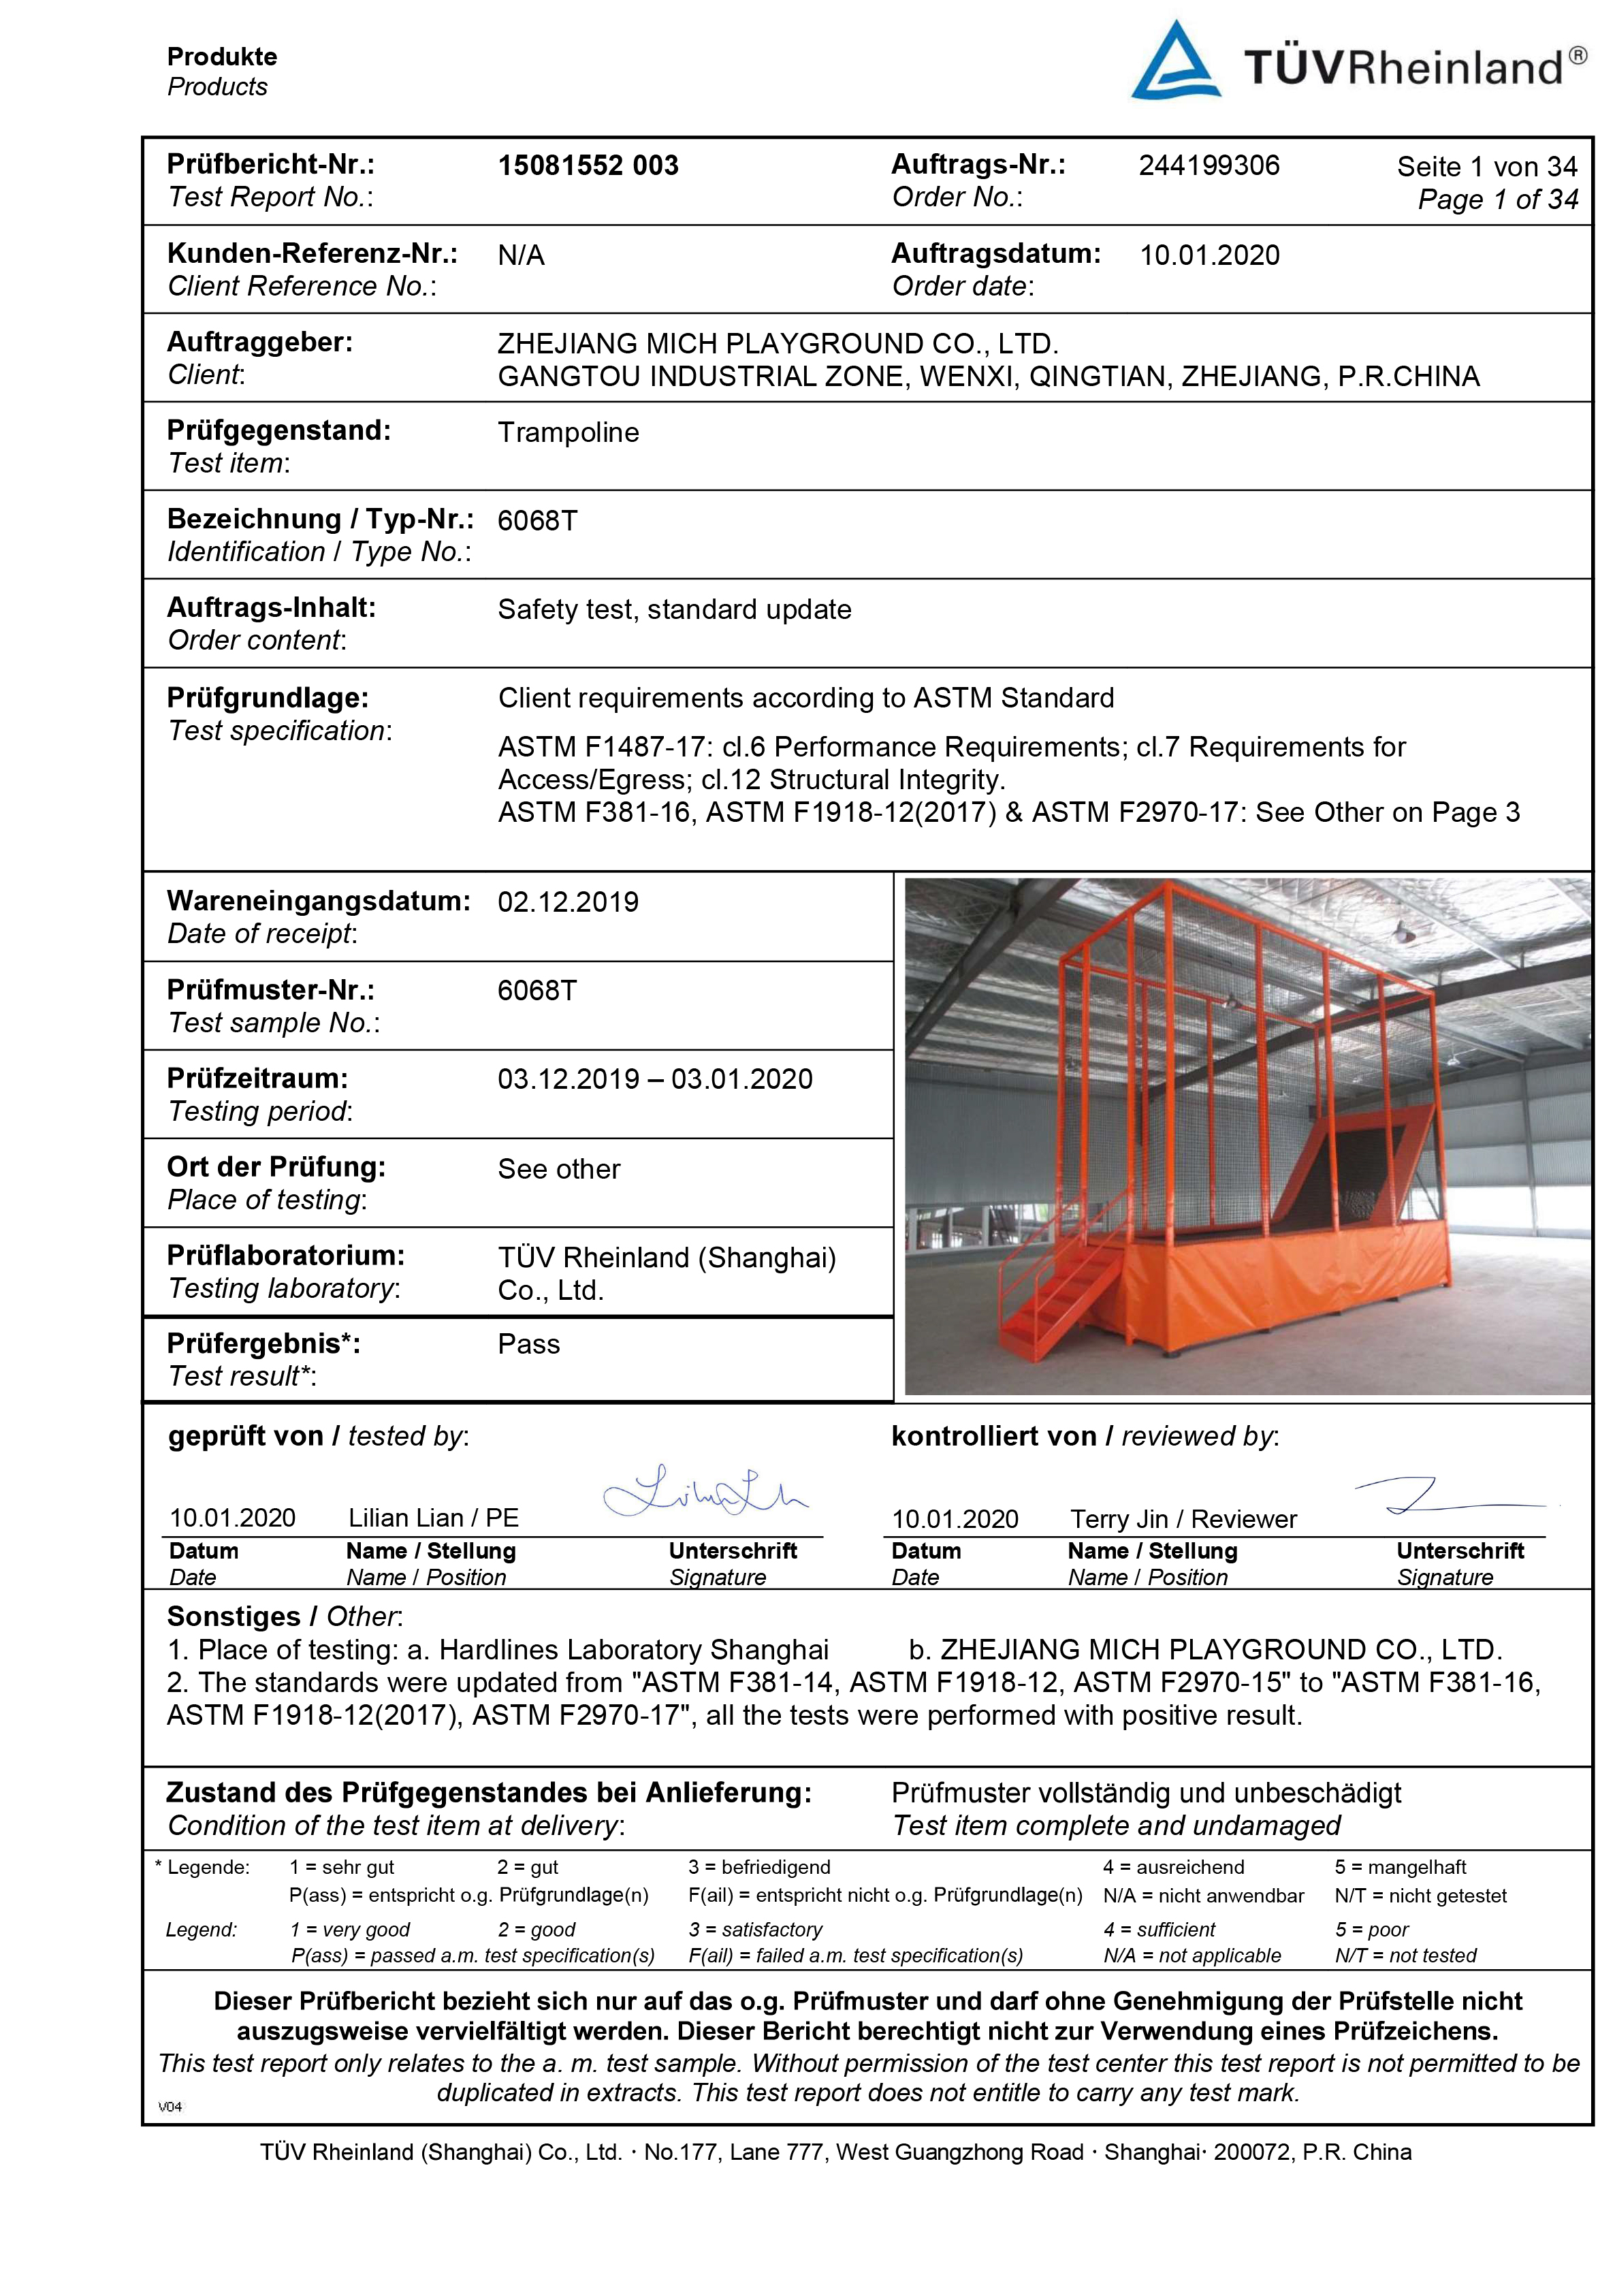 Produttore di parco di trampolino certificato ASTM